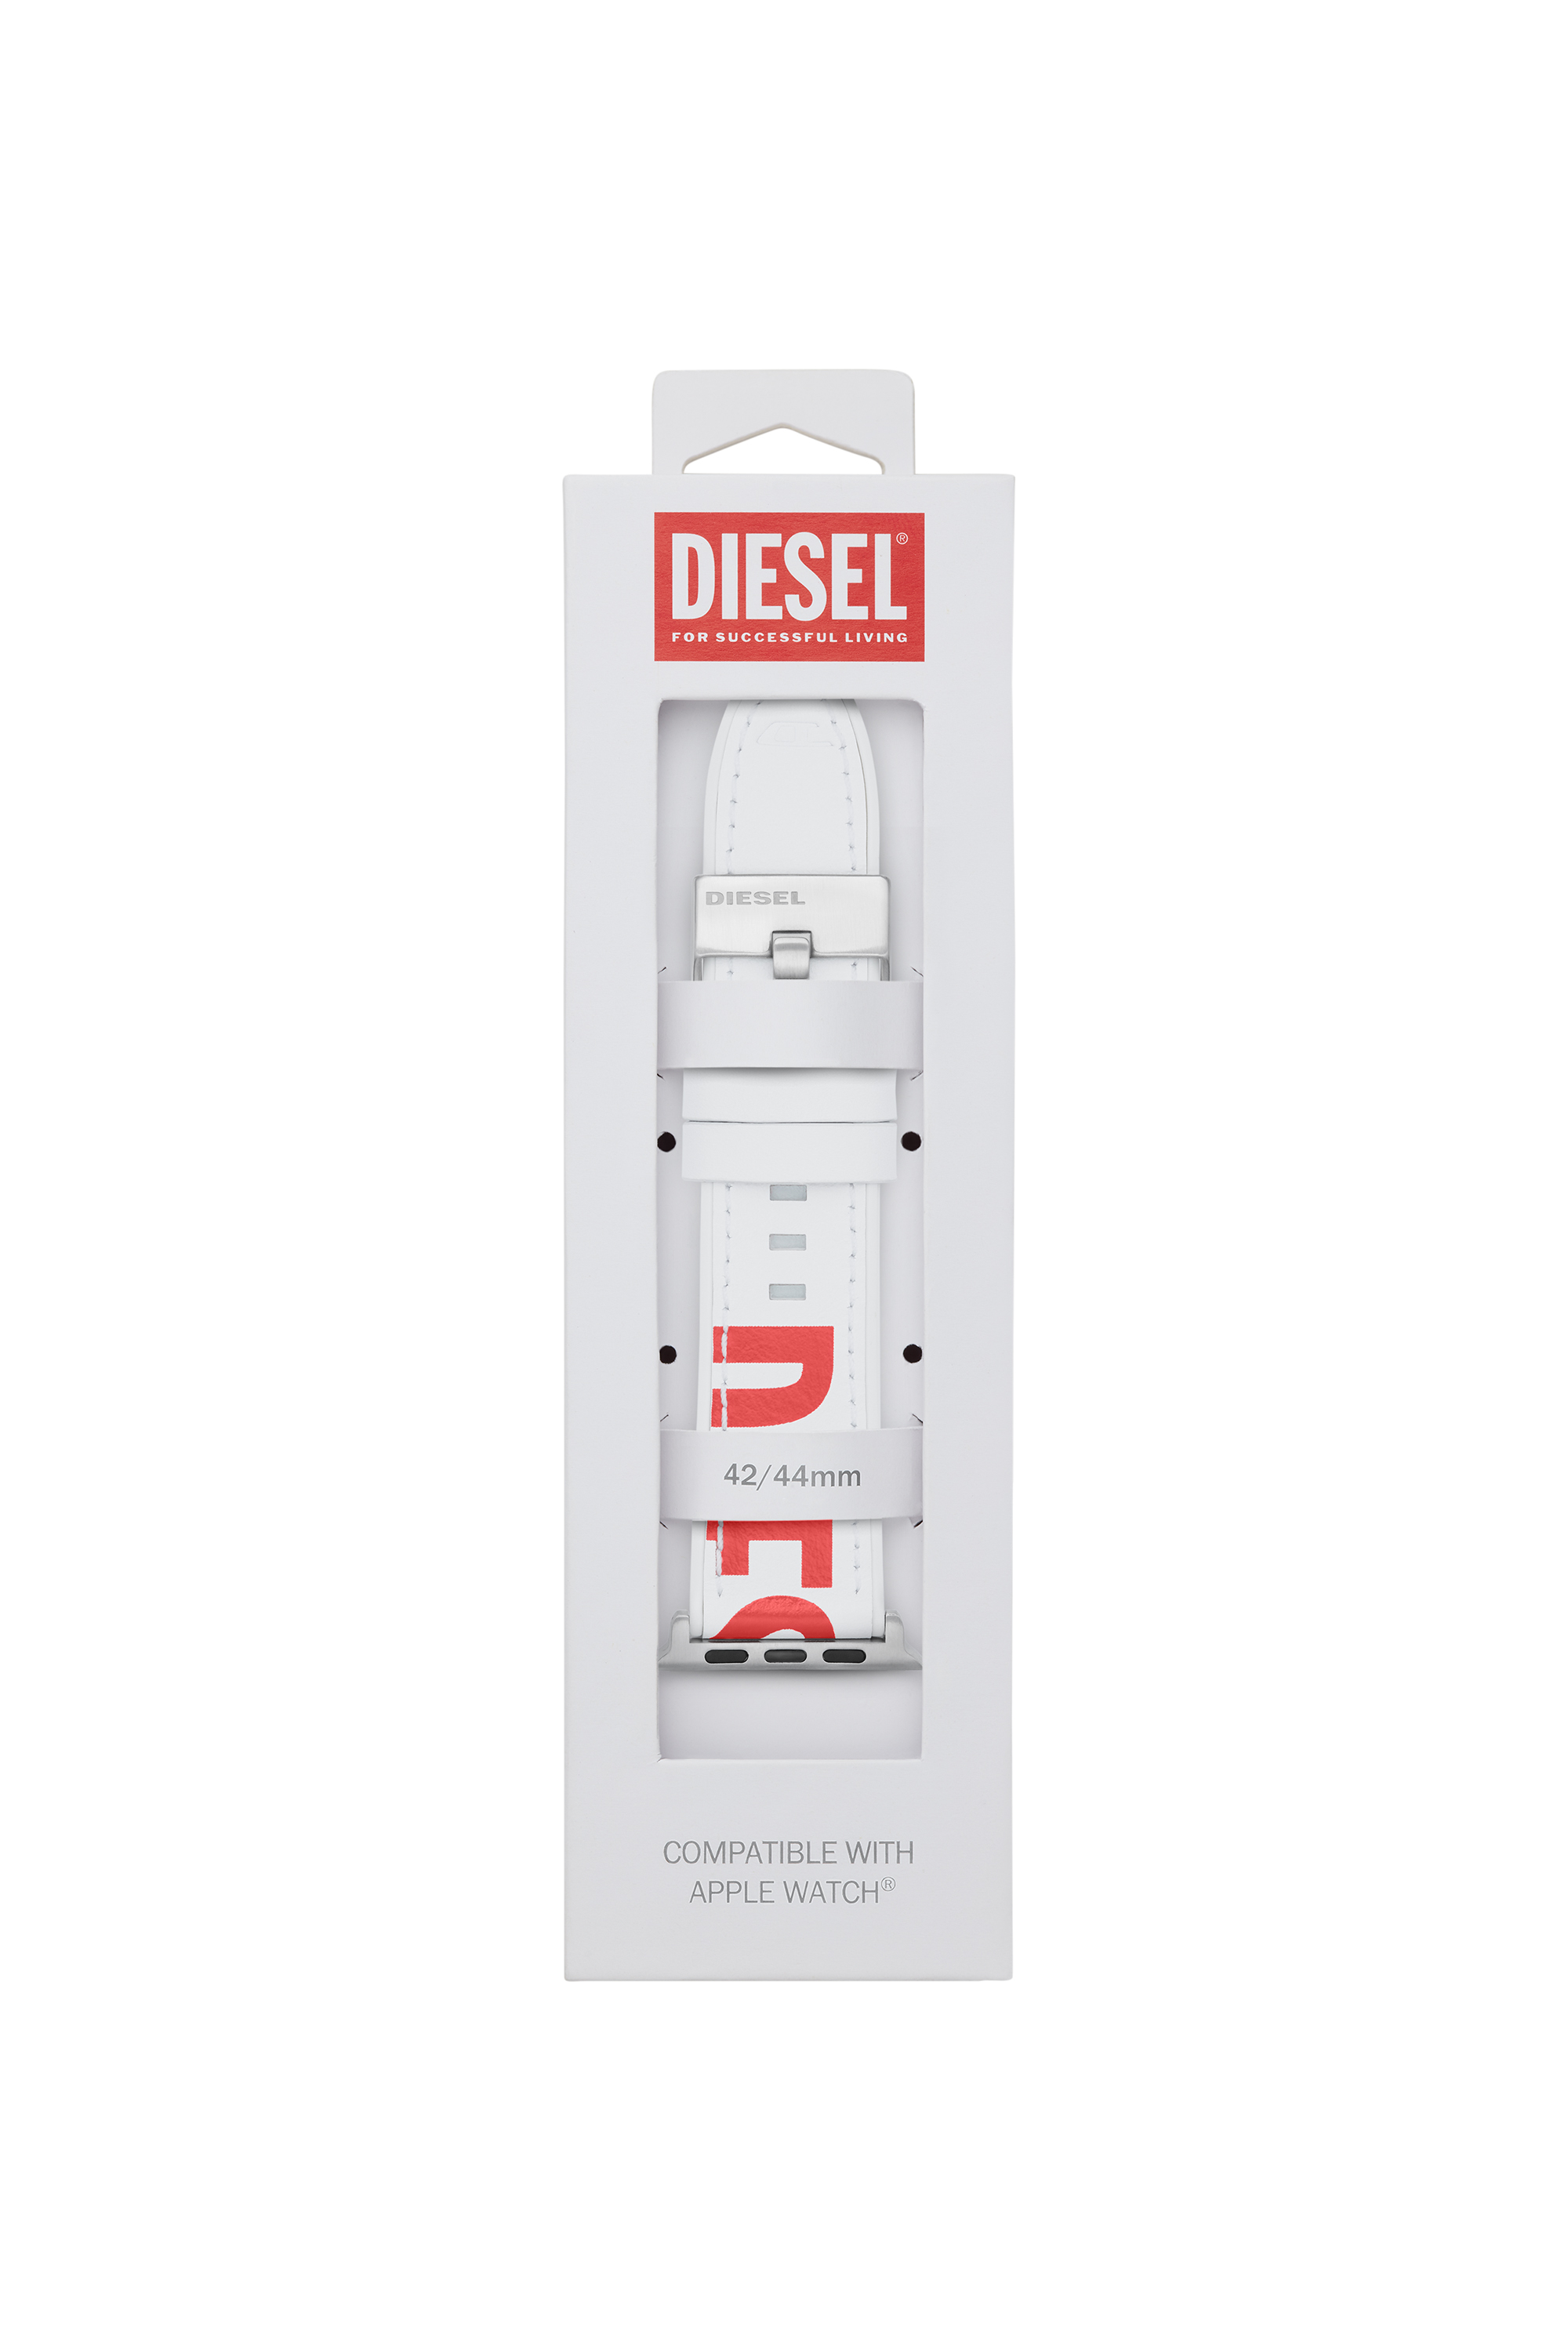 Diesel - DSS004, White - Image 2